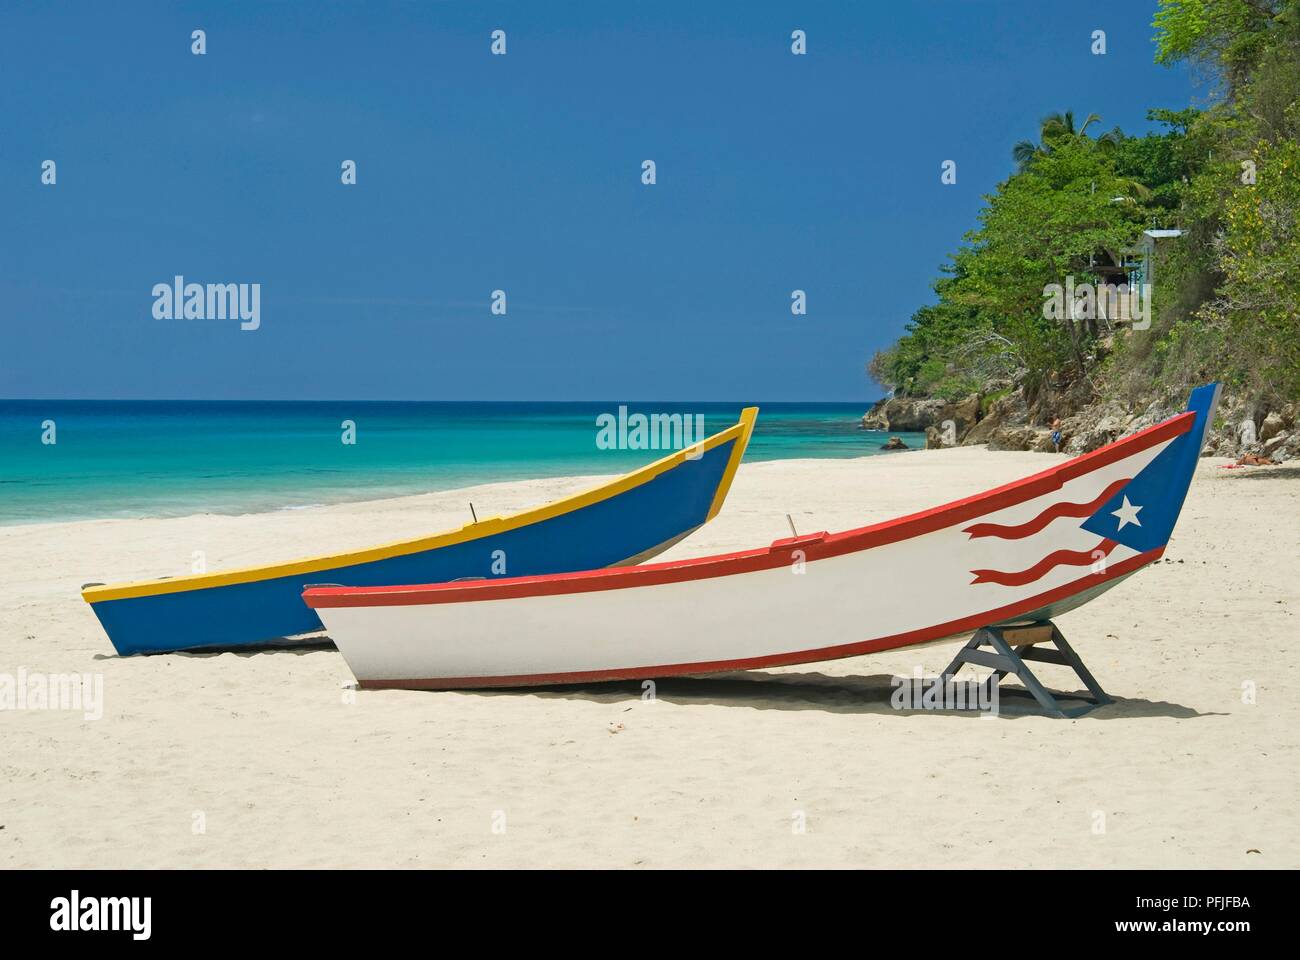 Puerto Rico, Playa Crash Boat, two colourful boats on sandy beach Stock Photo